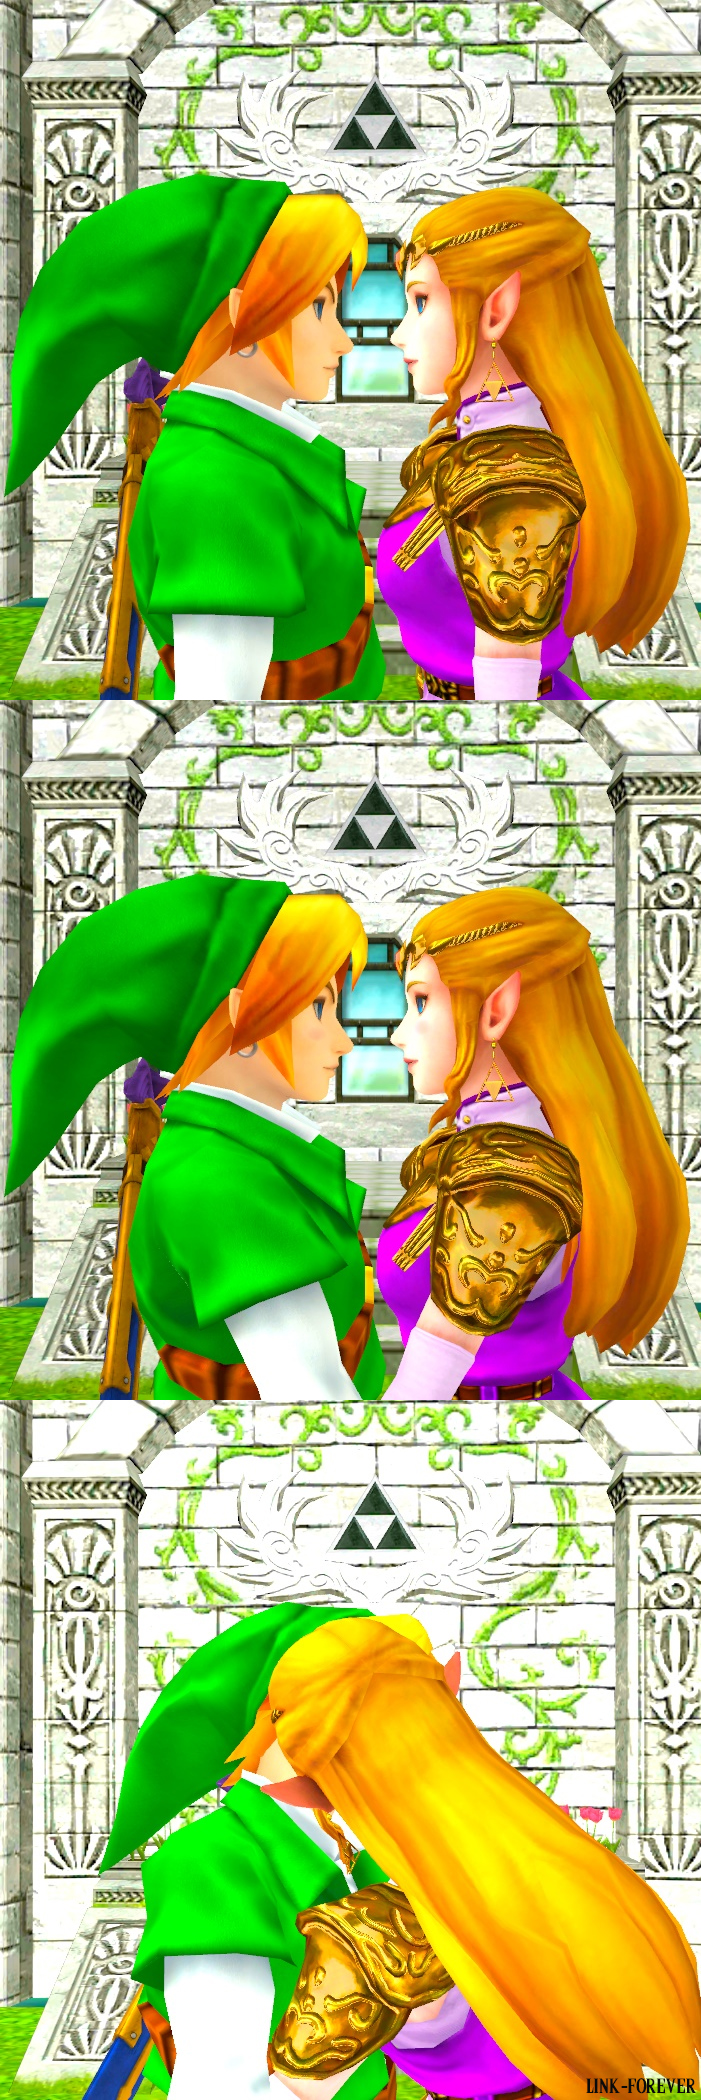 Ocarina of Time AU - Zelda and Link by Kaikkei on DeviantArt